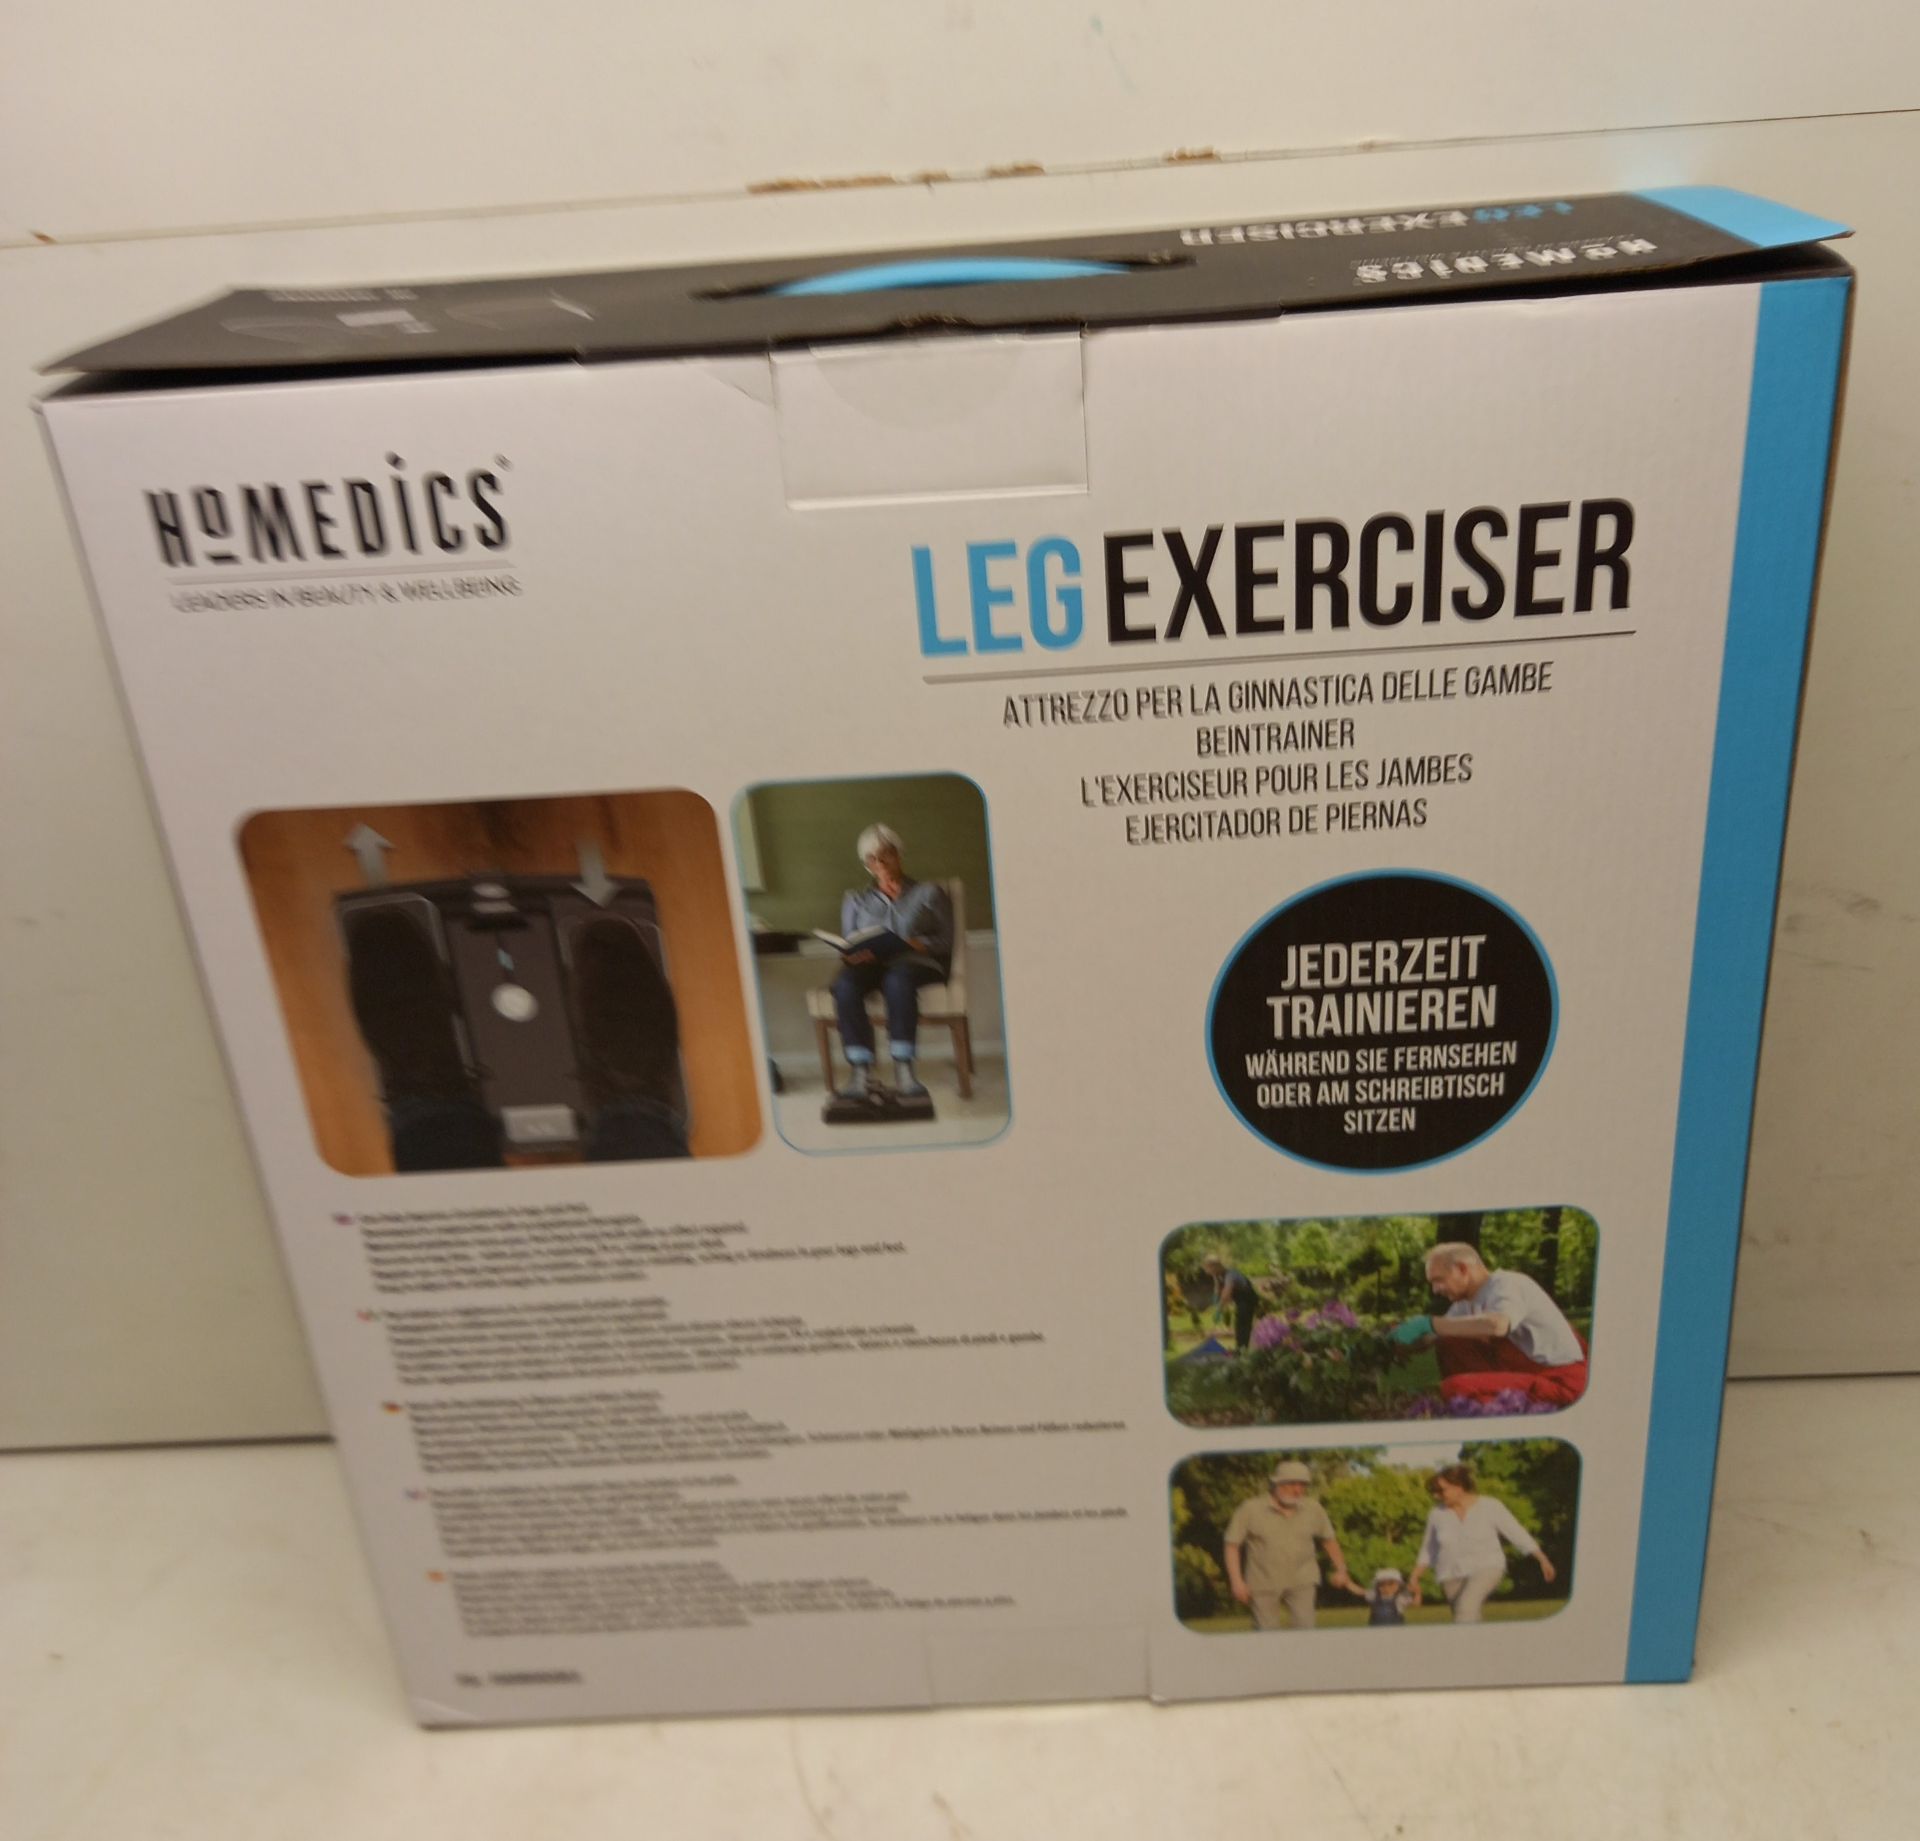 HoMedics Leg Exerciser - Image 2 of 2